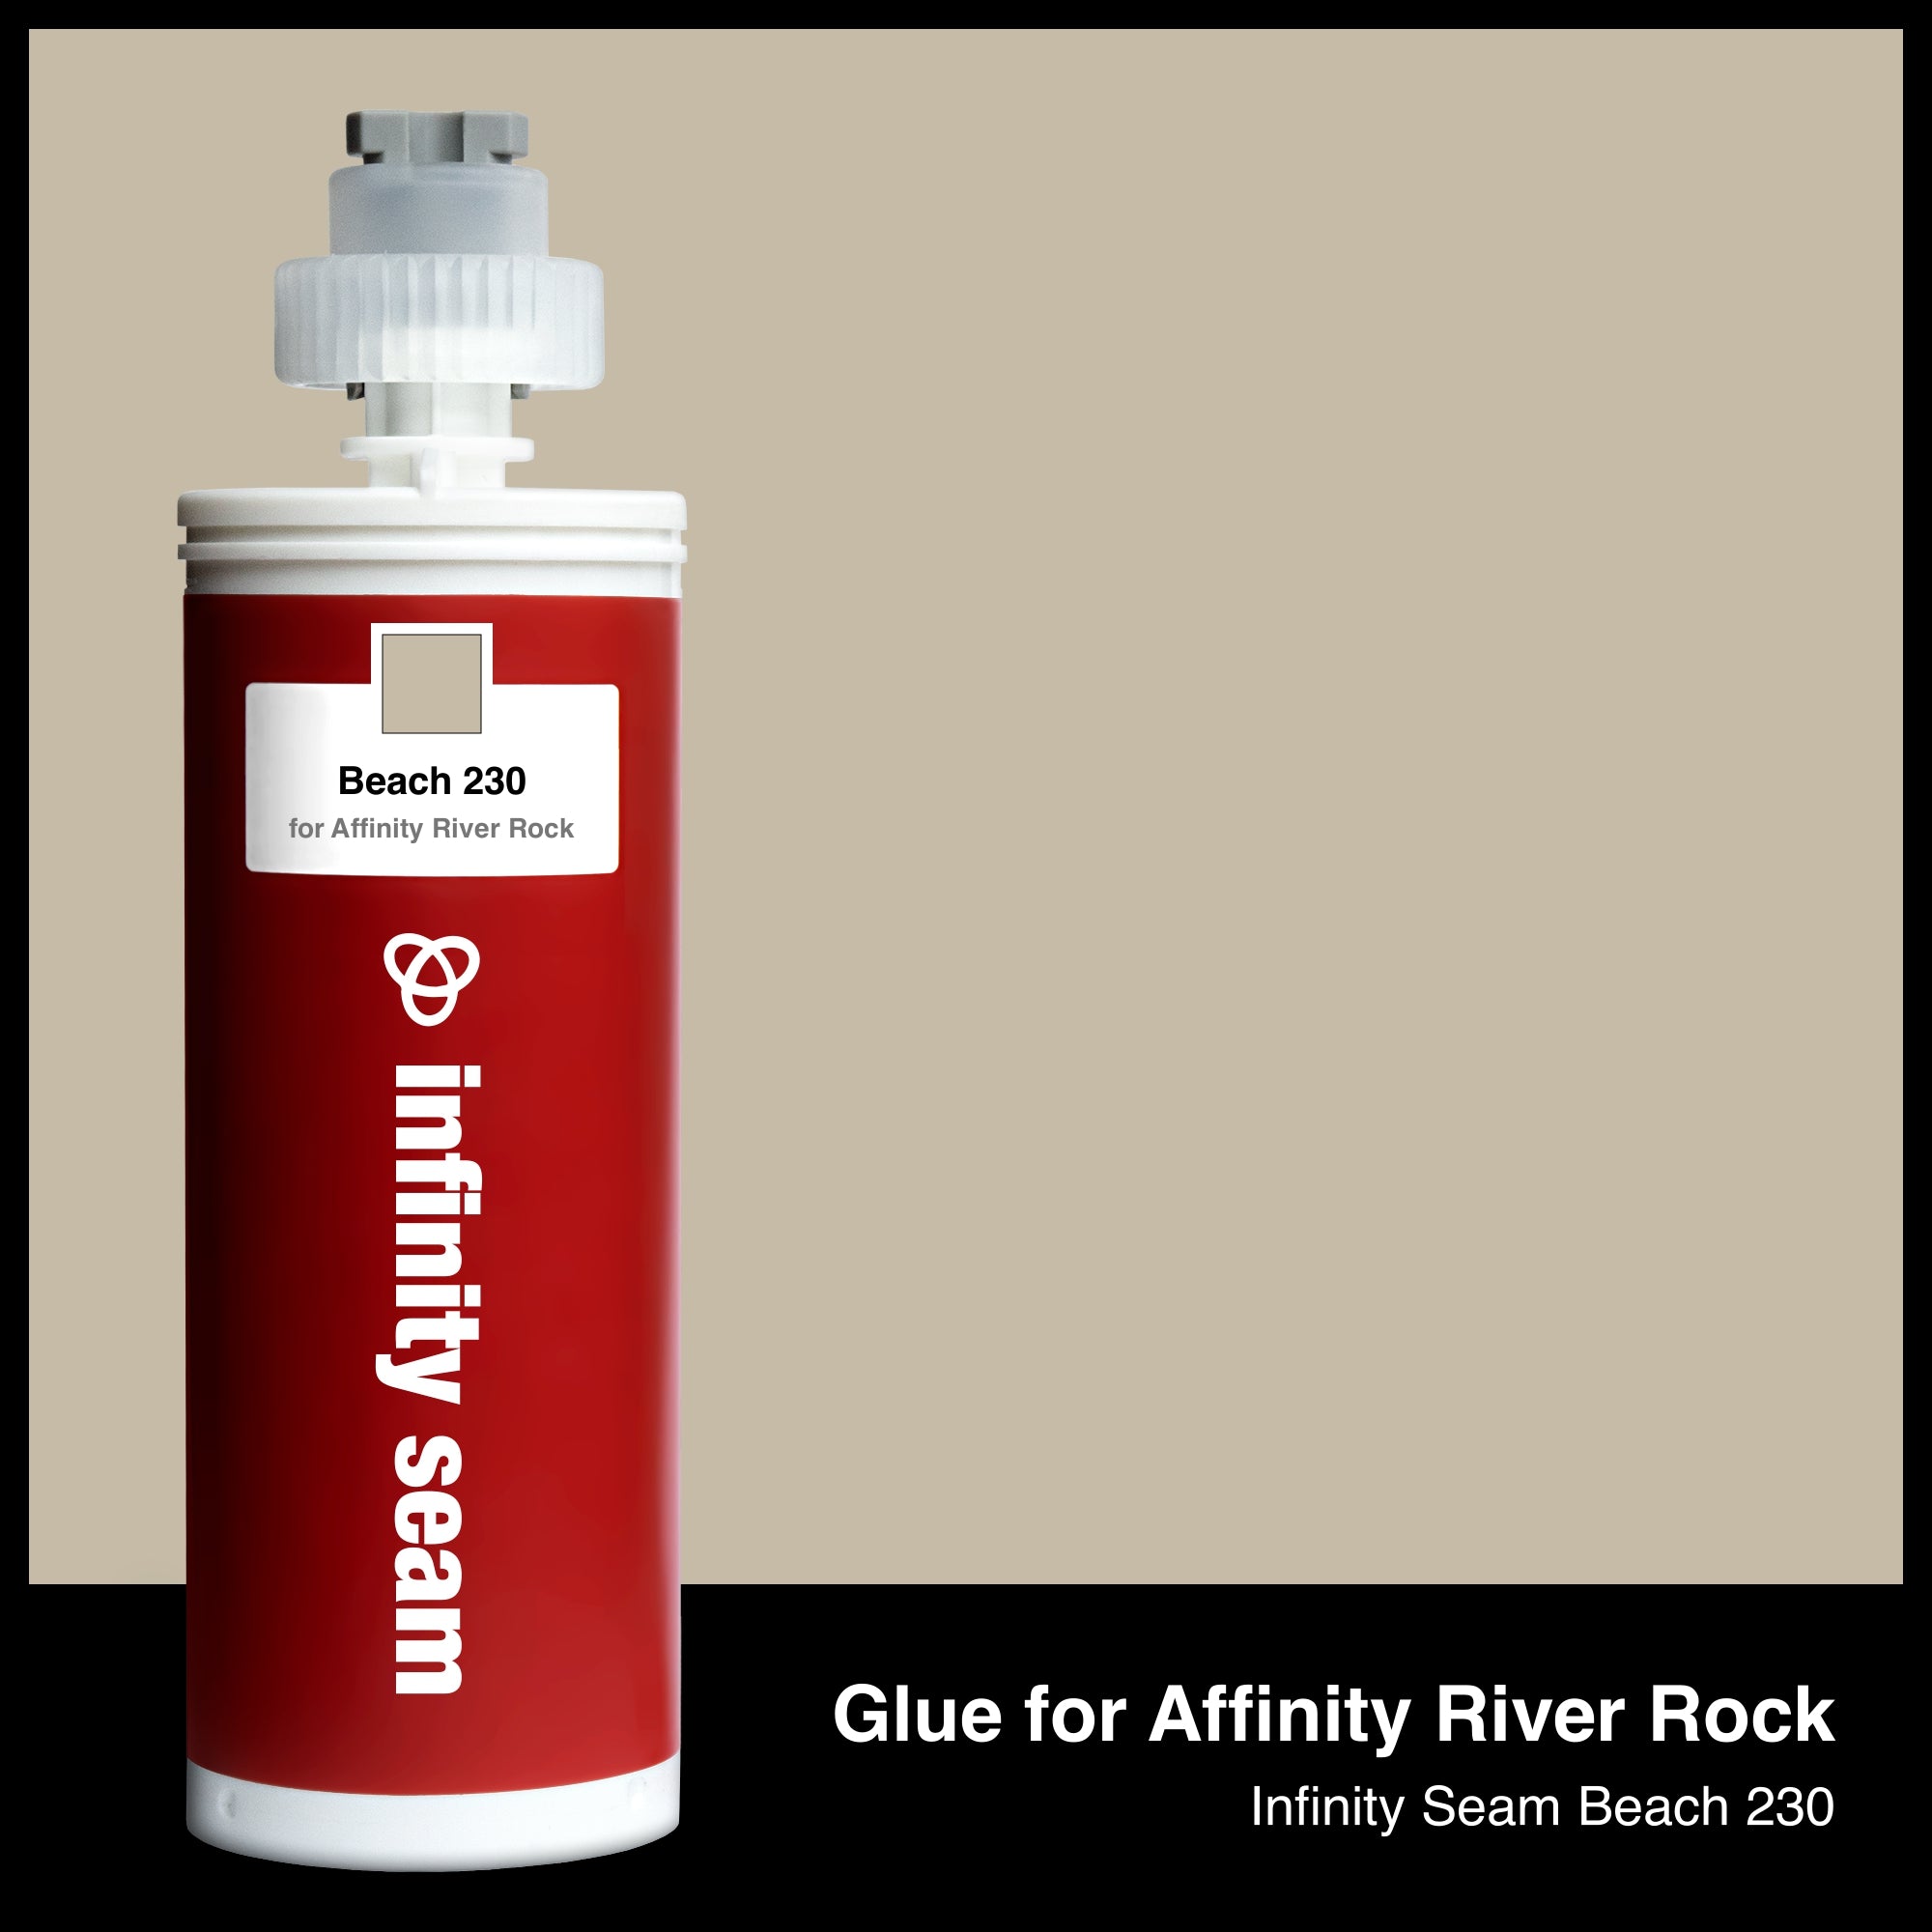 Glue for Affinity River Rock